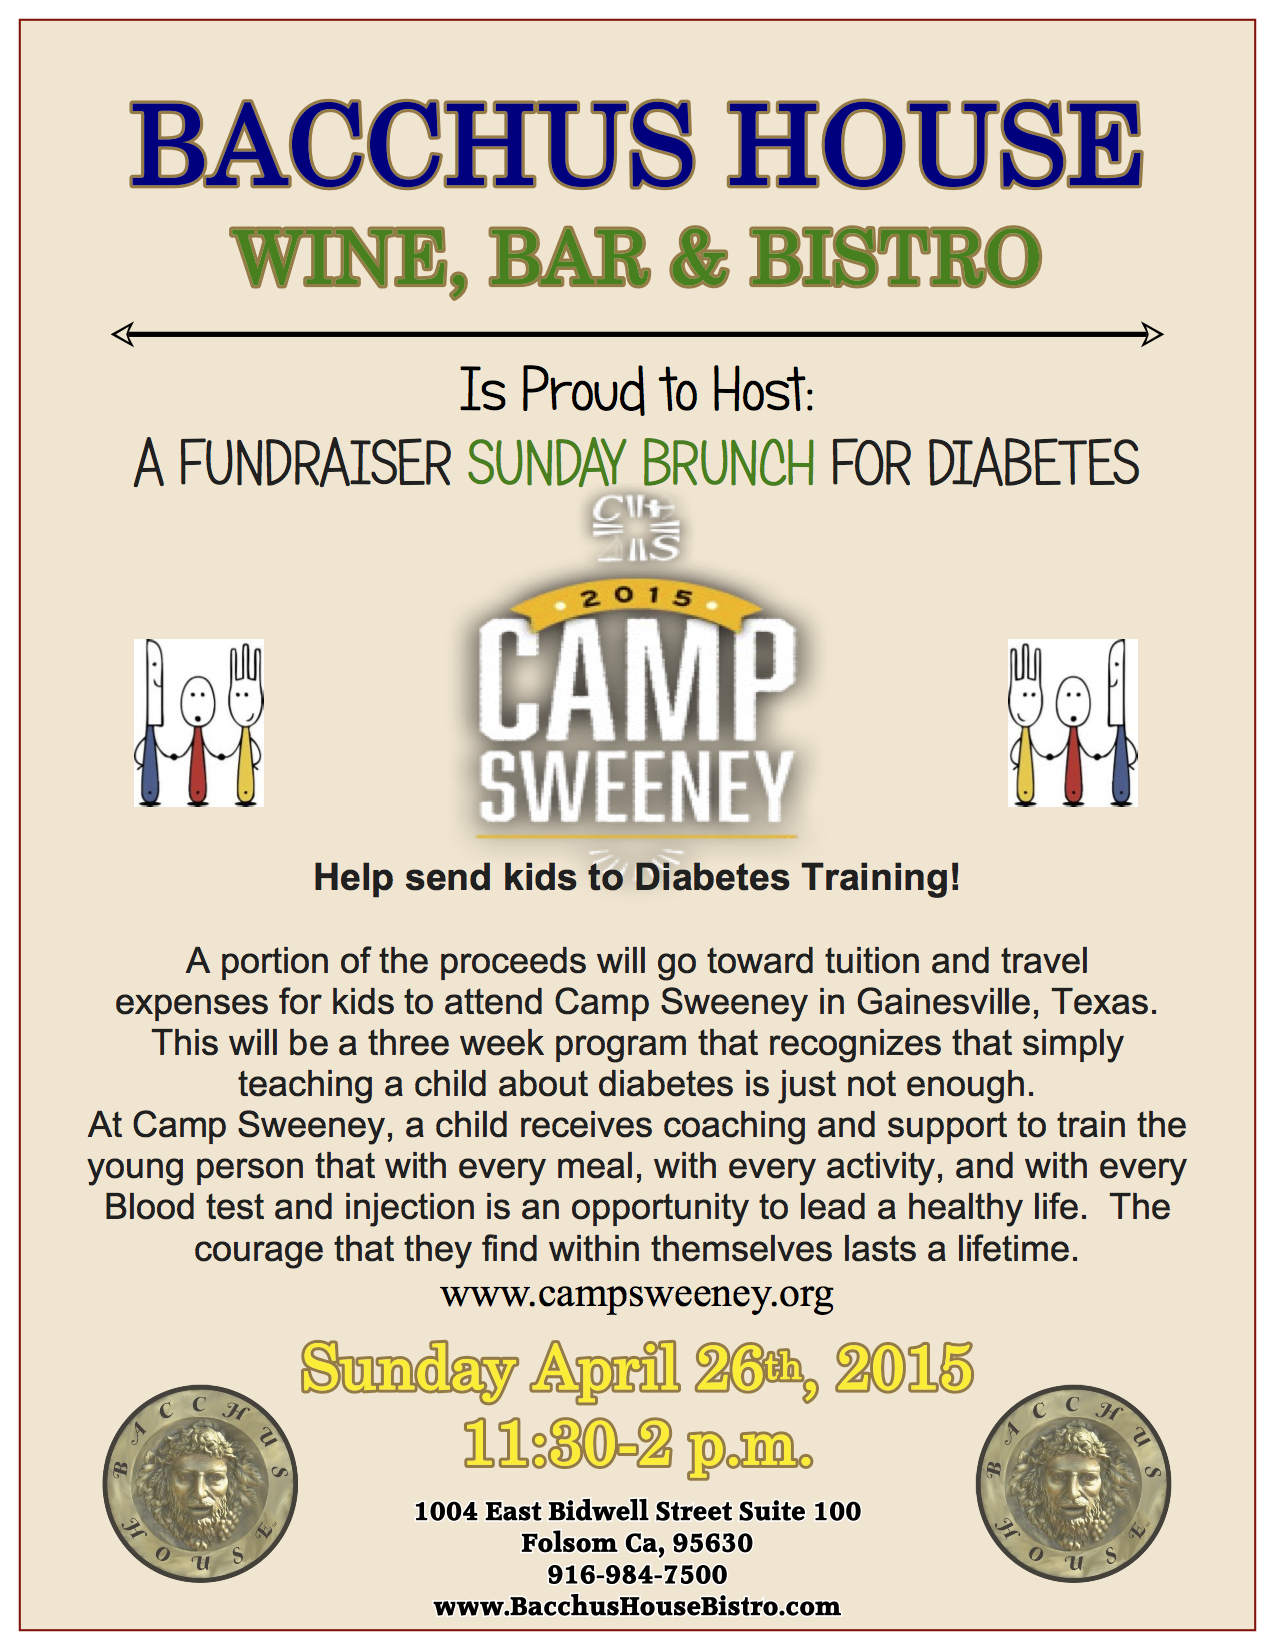 Camp Sweeney Sunday Brunch Fundraiser